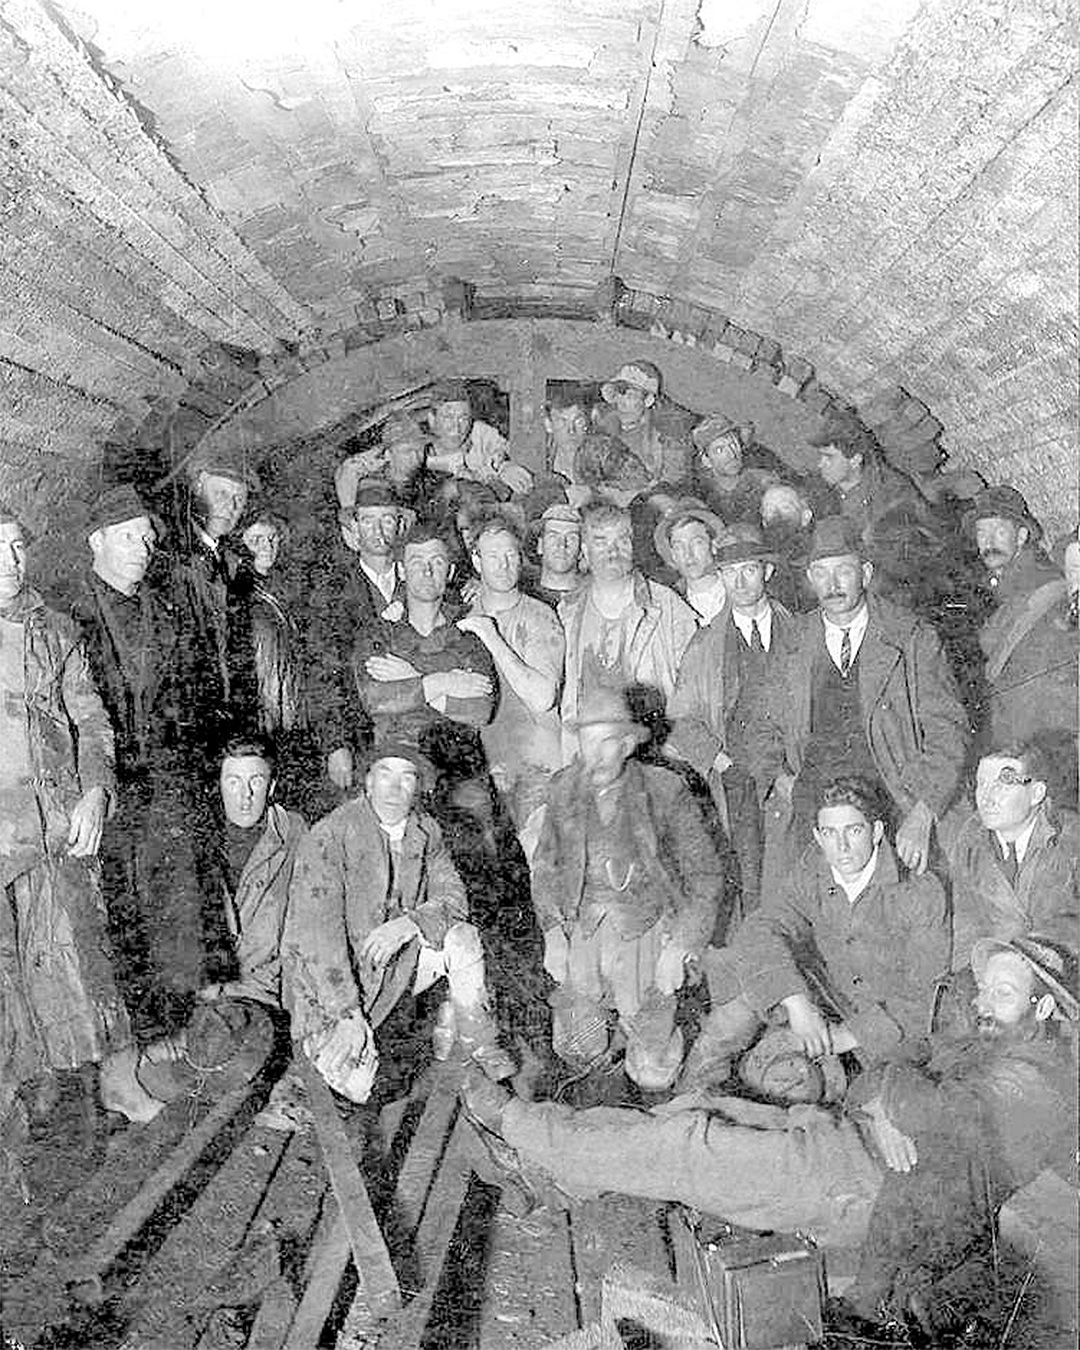 Otira Tunnel workers celebrate their work.